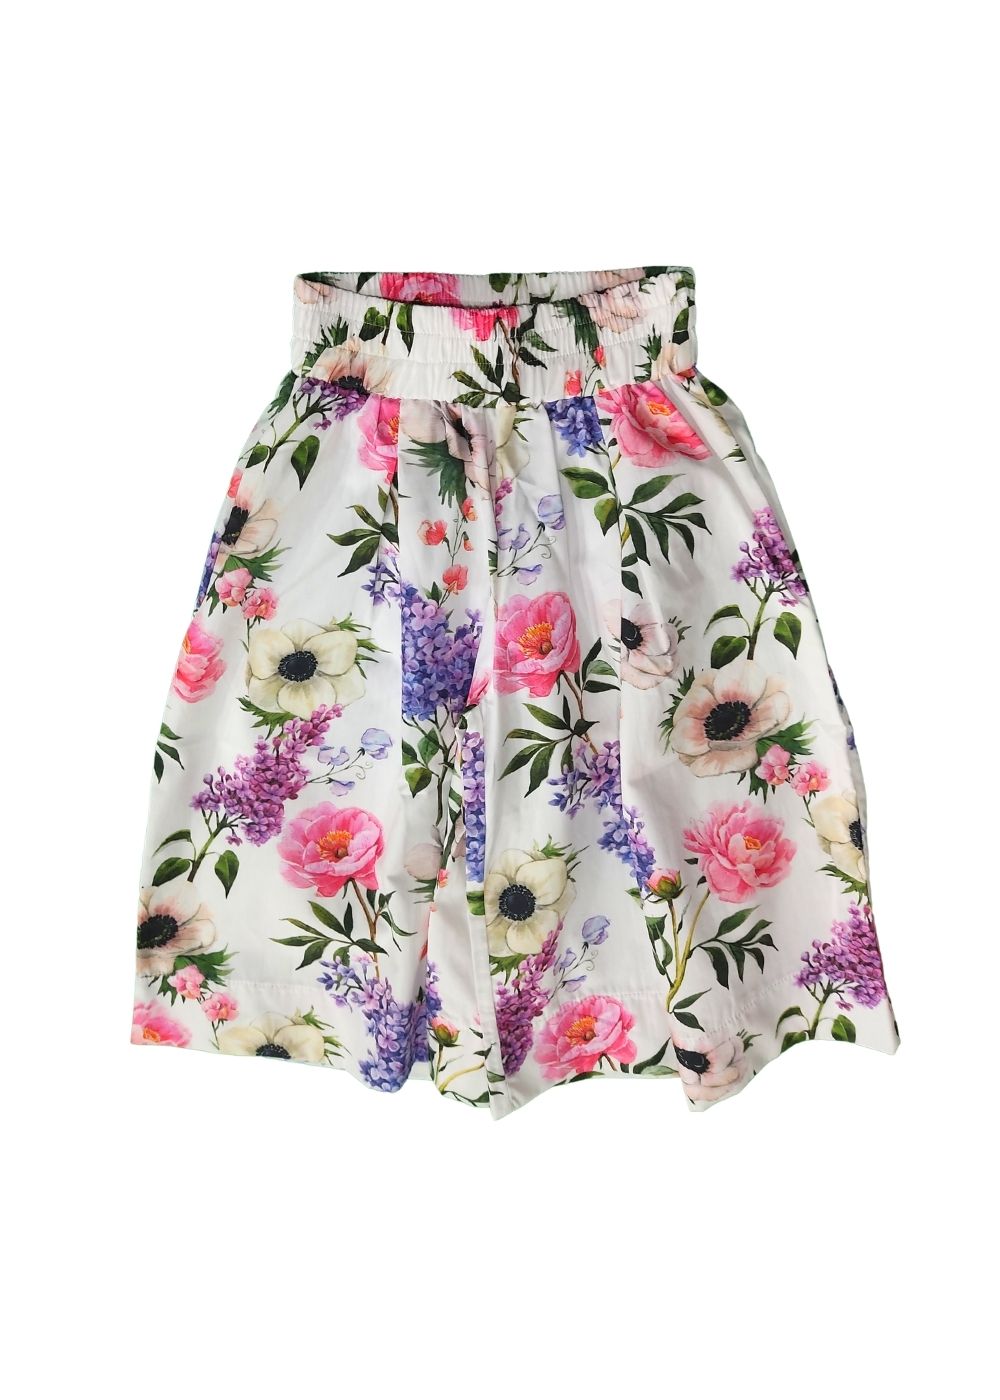 Featured image for “Magil pantalone ampio a fiori”